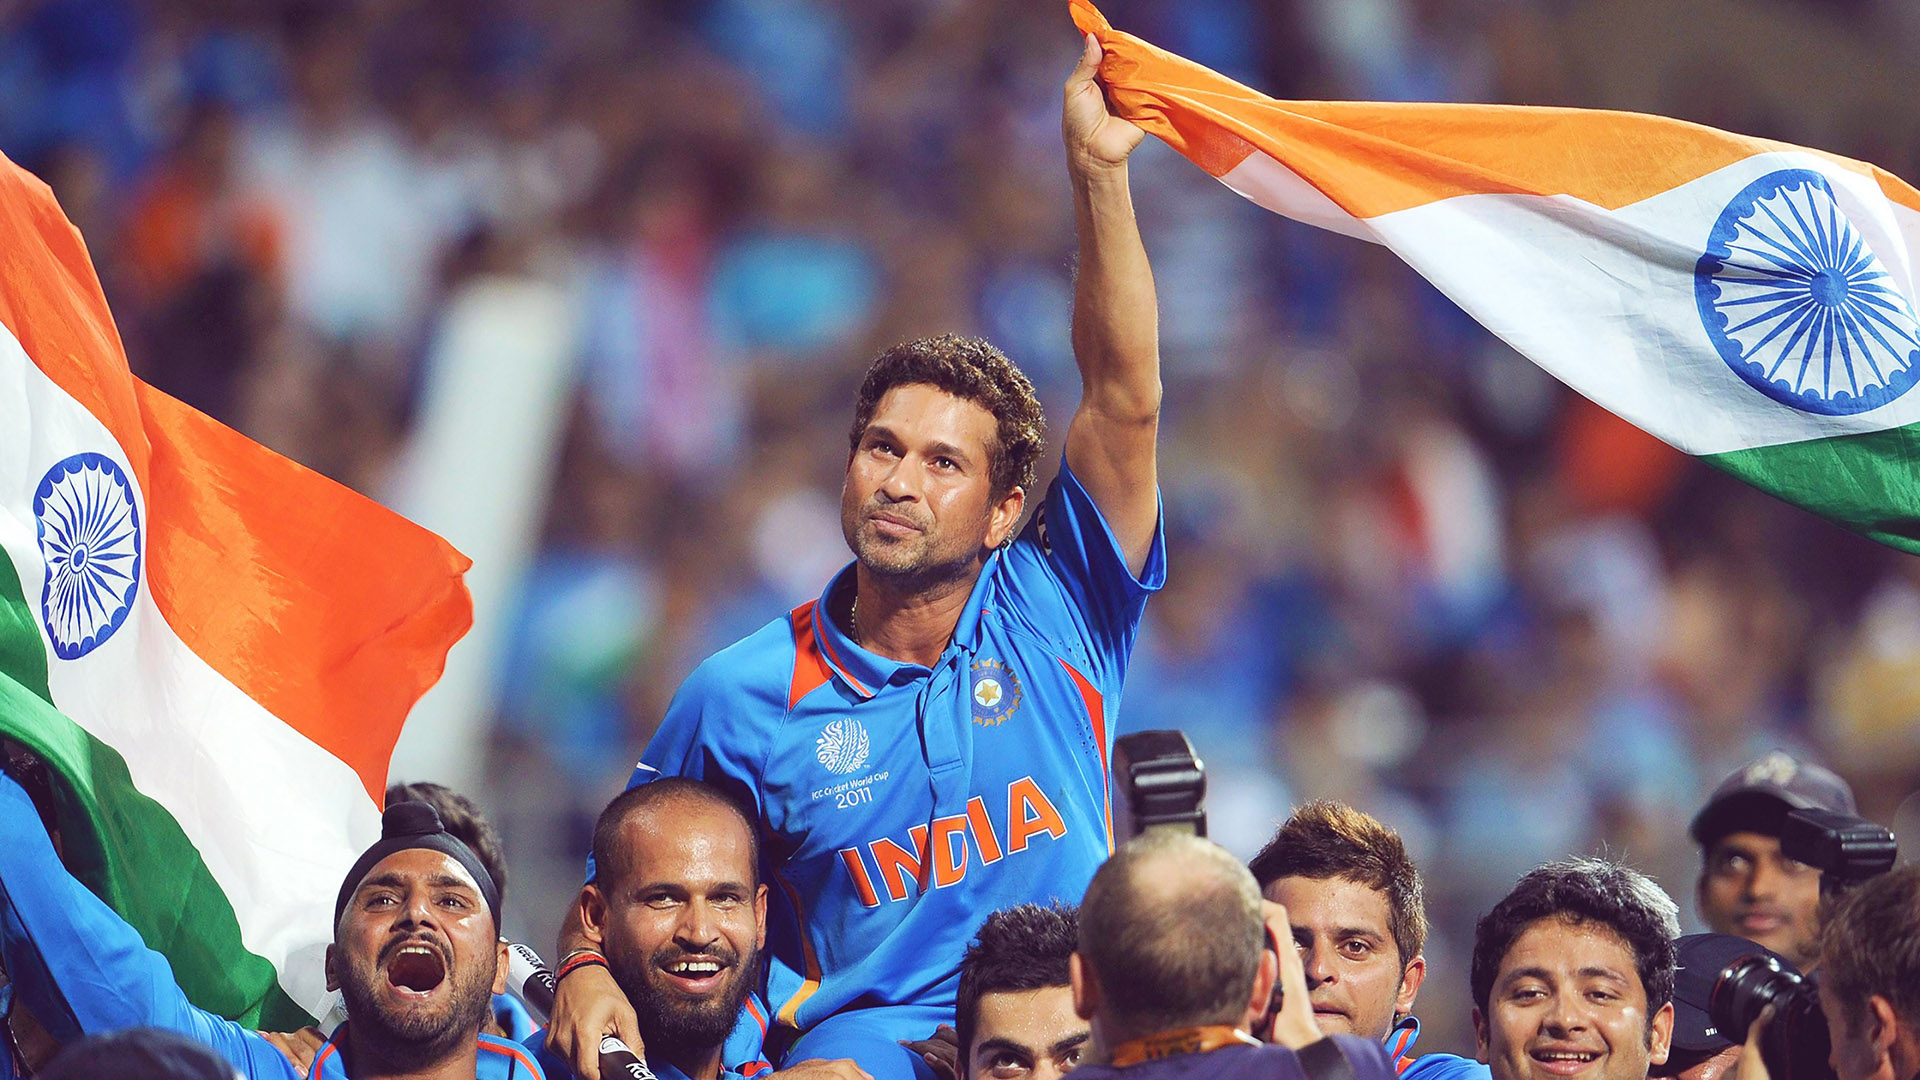 Sachin Tendulkar Celebrating 2011 Cricket World Cup India with Indian Flag